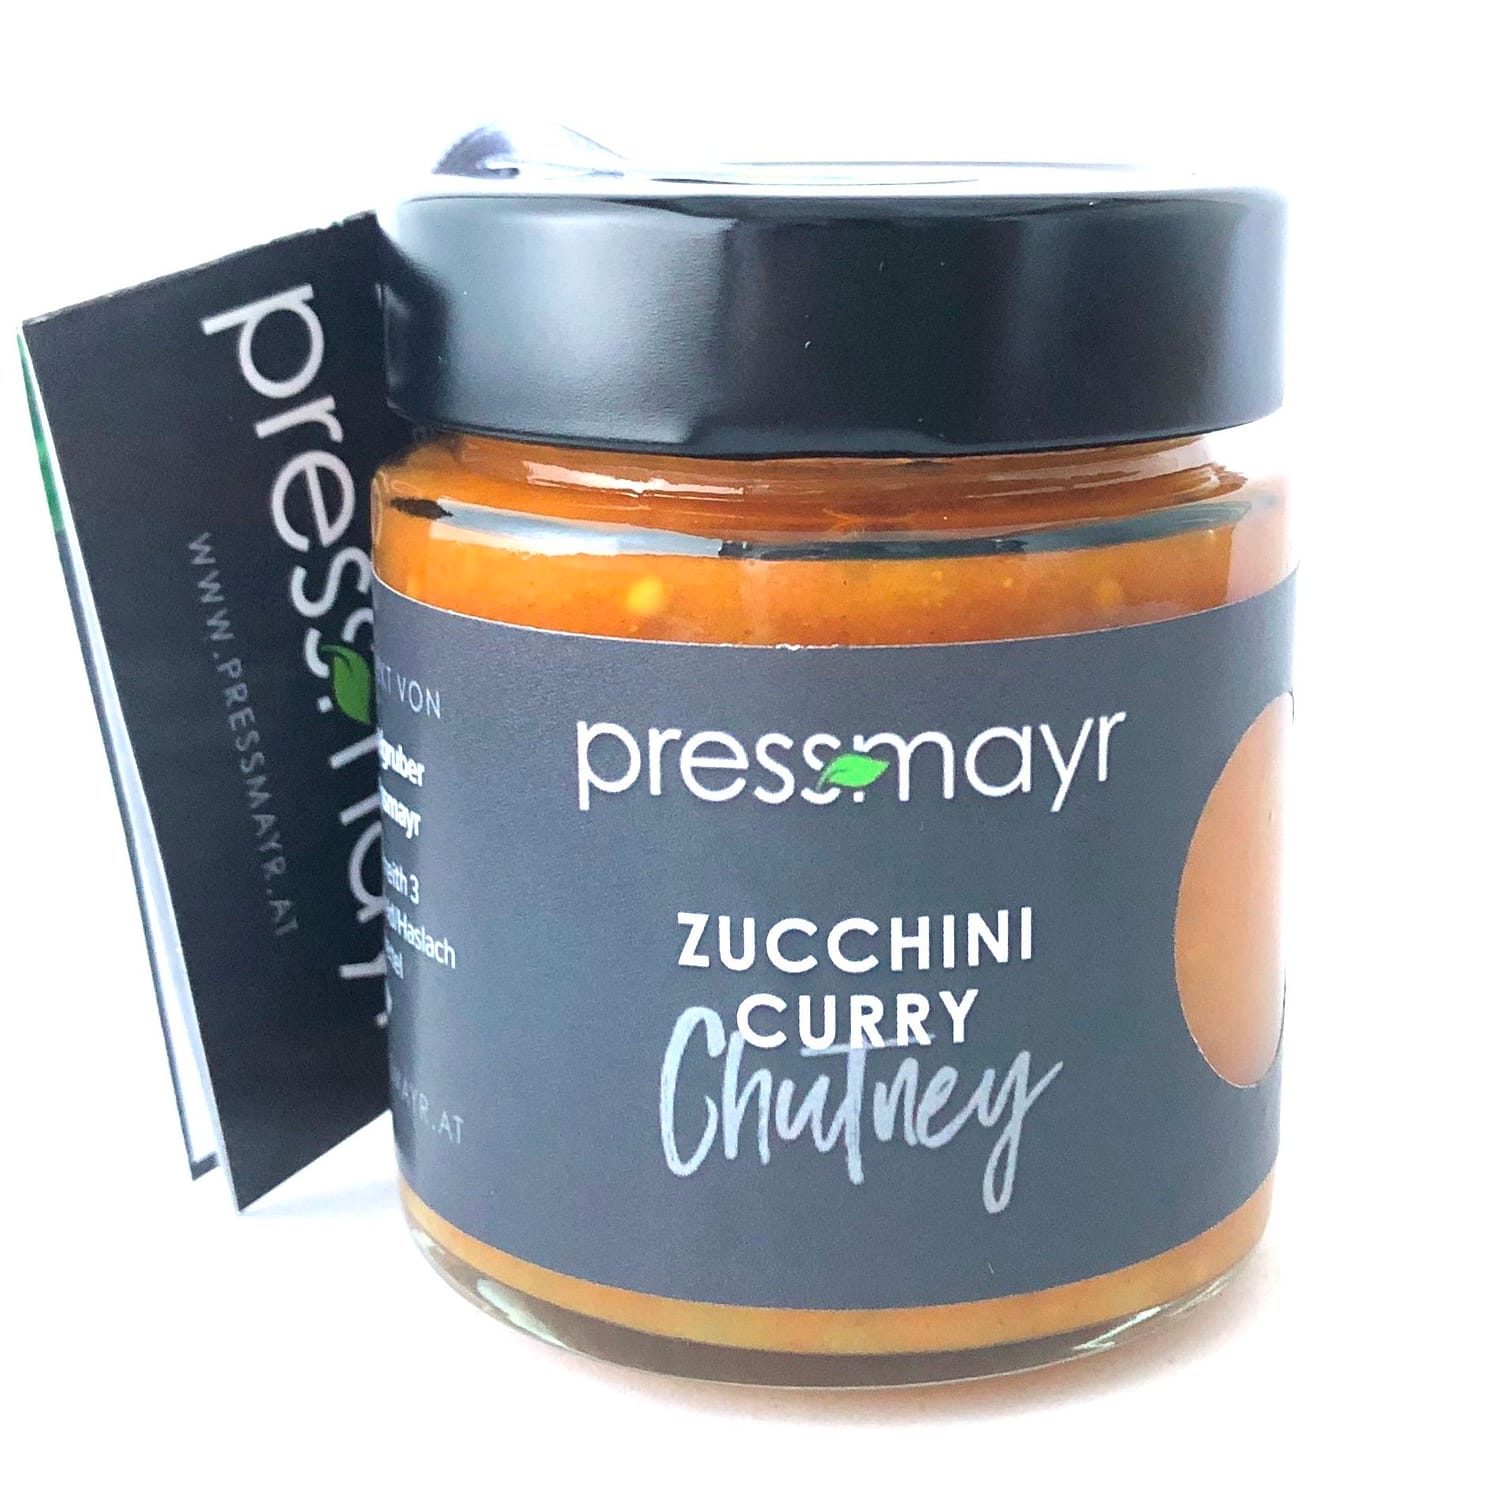 Zucchini-Curry Chutney